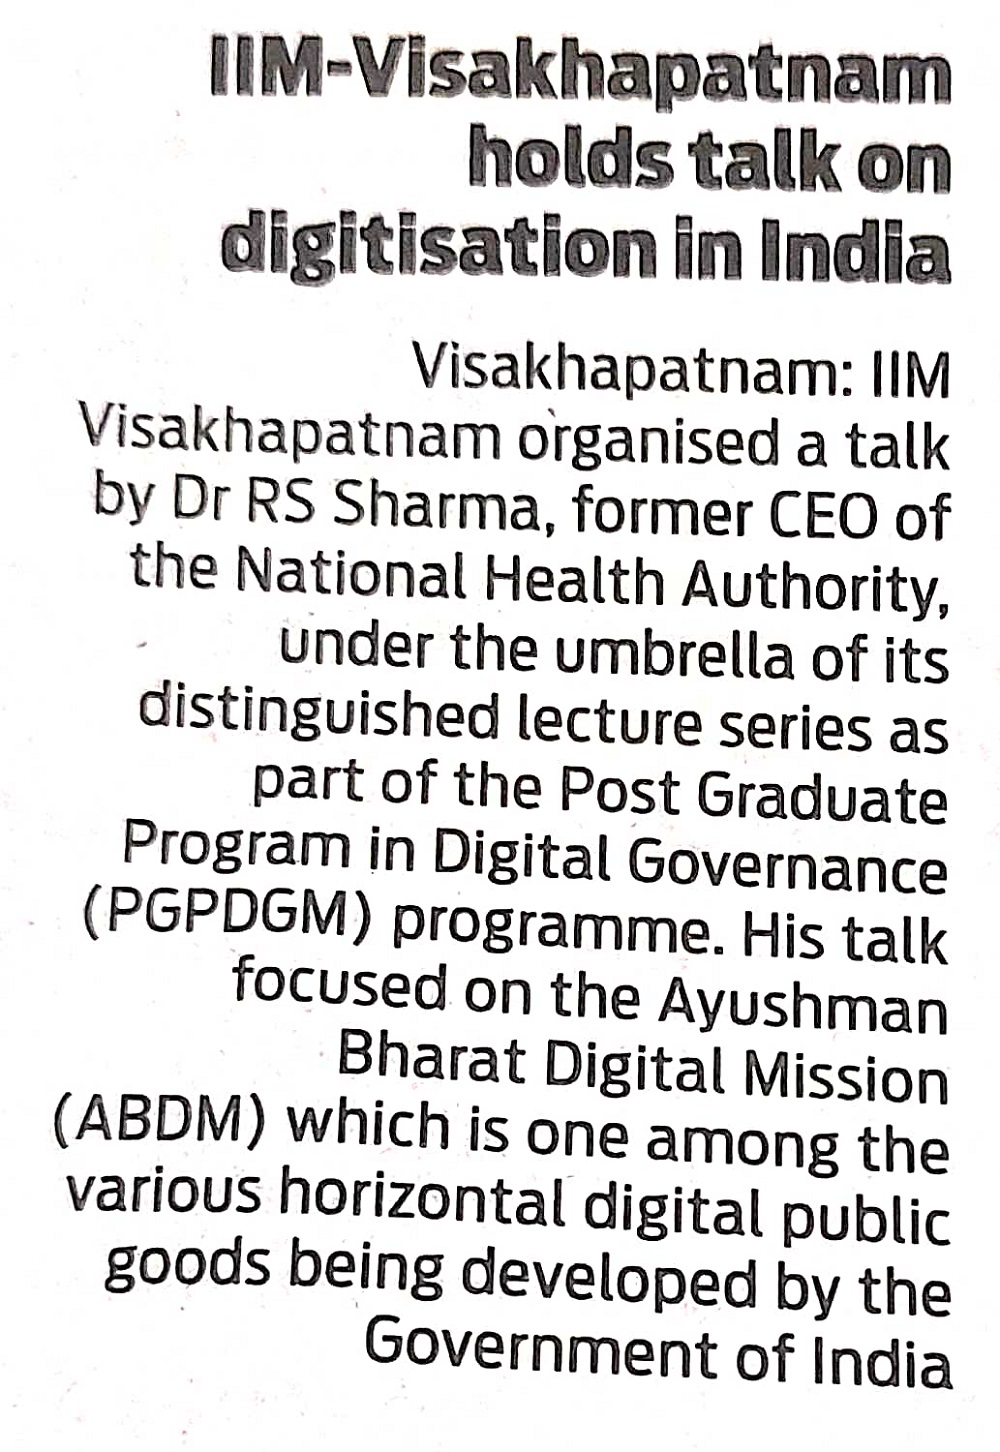 IIMV Holds Talk on Digitization in India - 28.02.2023